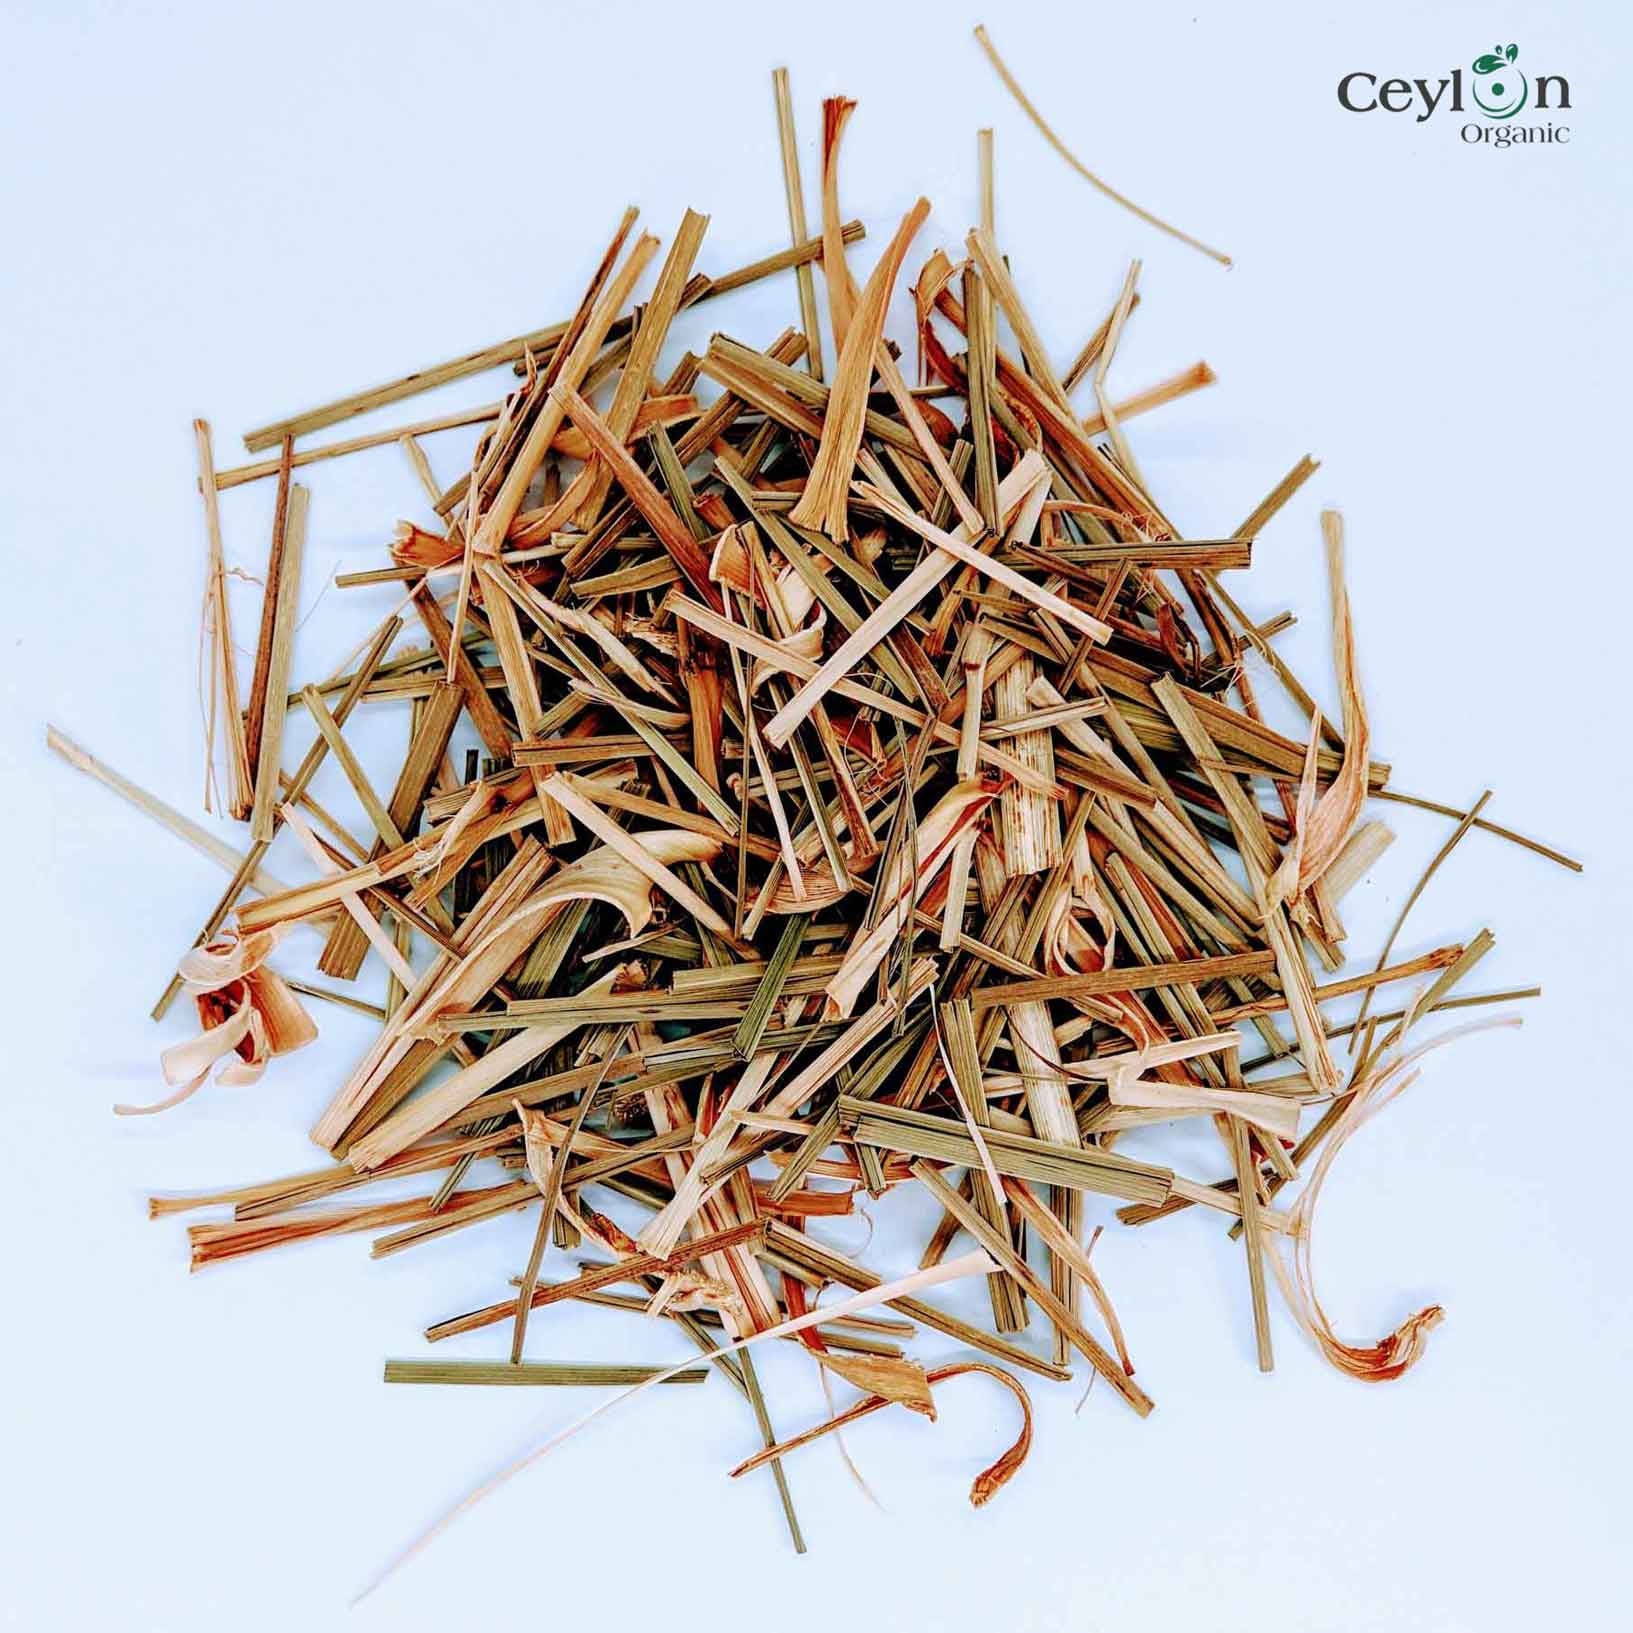 200g+  Dried Lemongrass 100% Organic | Ceylon organic-1